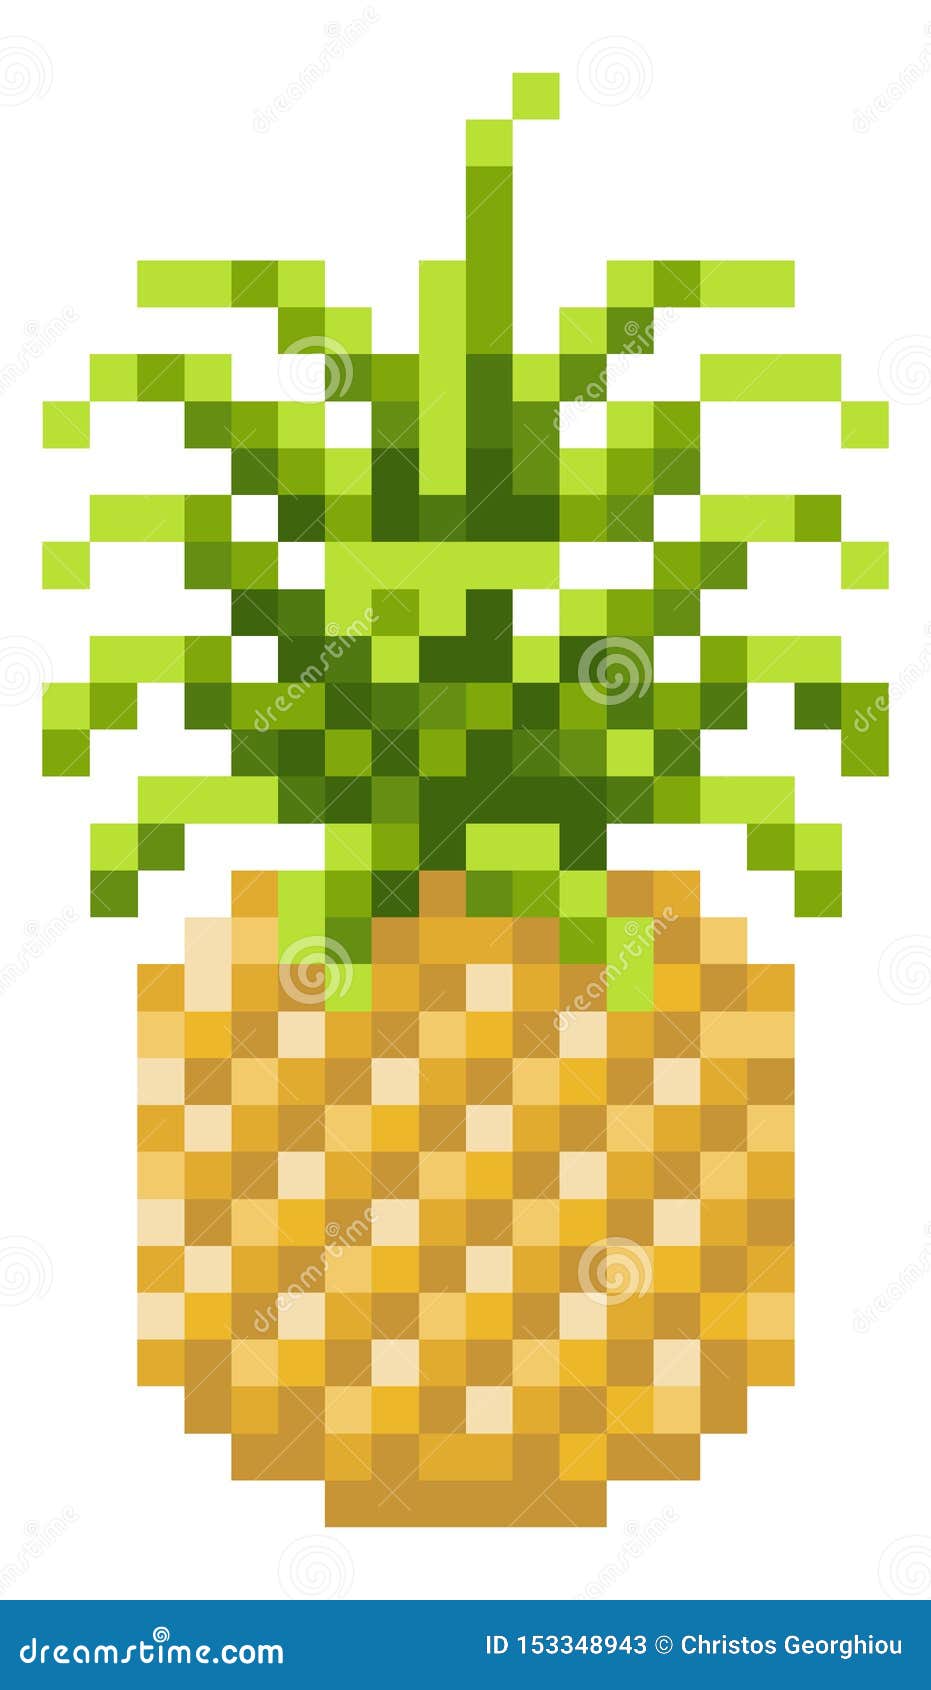 Pineapple Pixel Art 8 Bit Video Game Fruit Icon Stock Vector